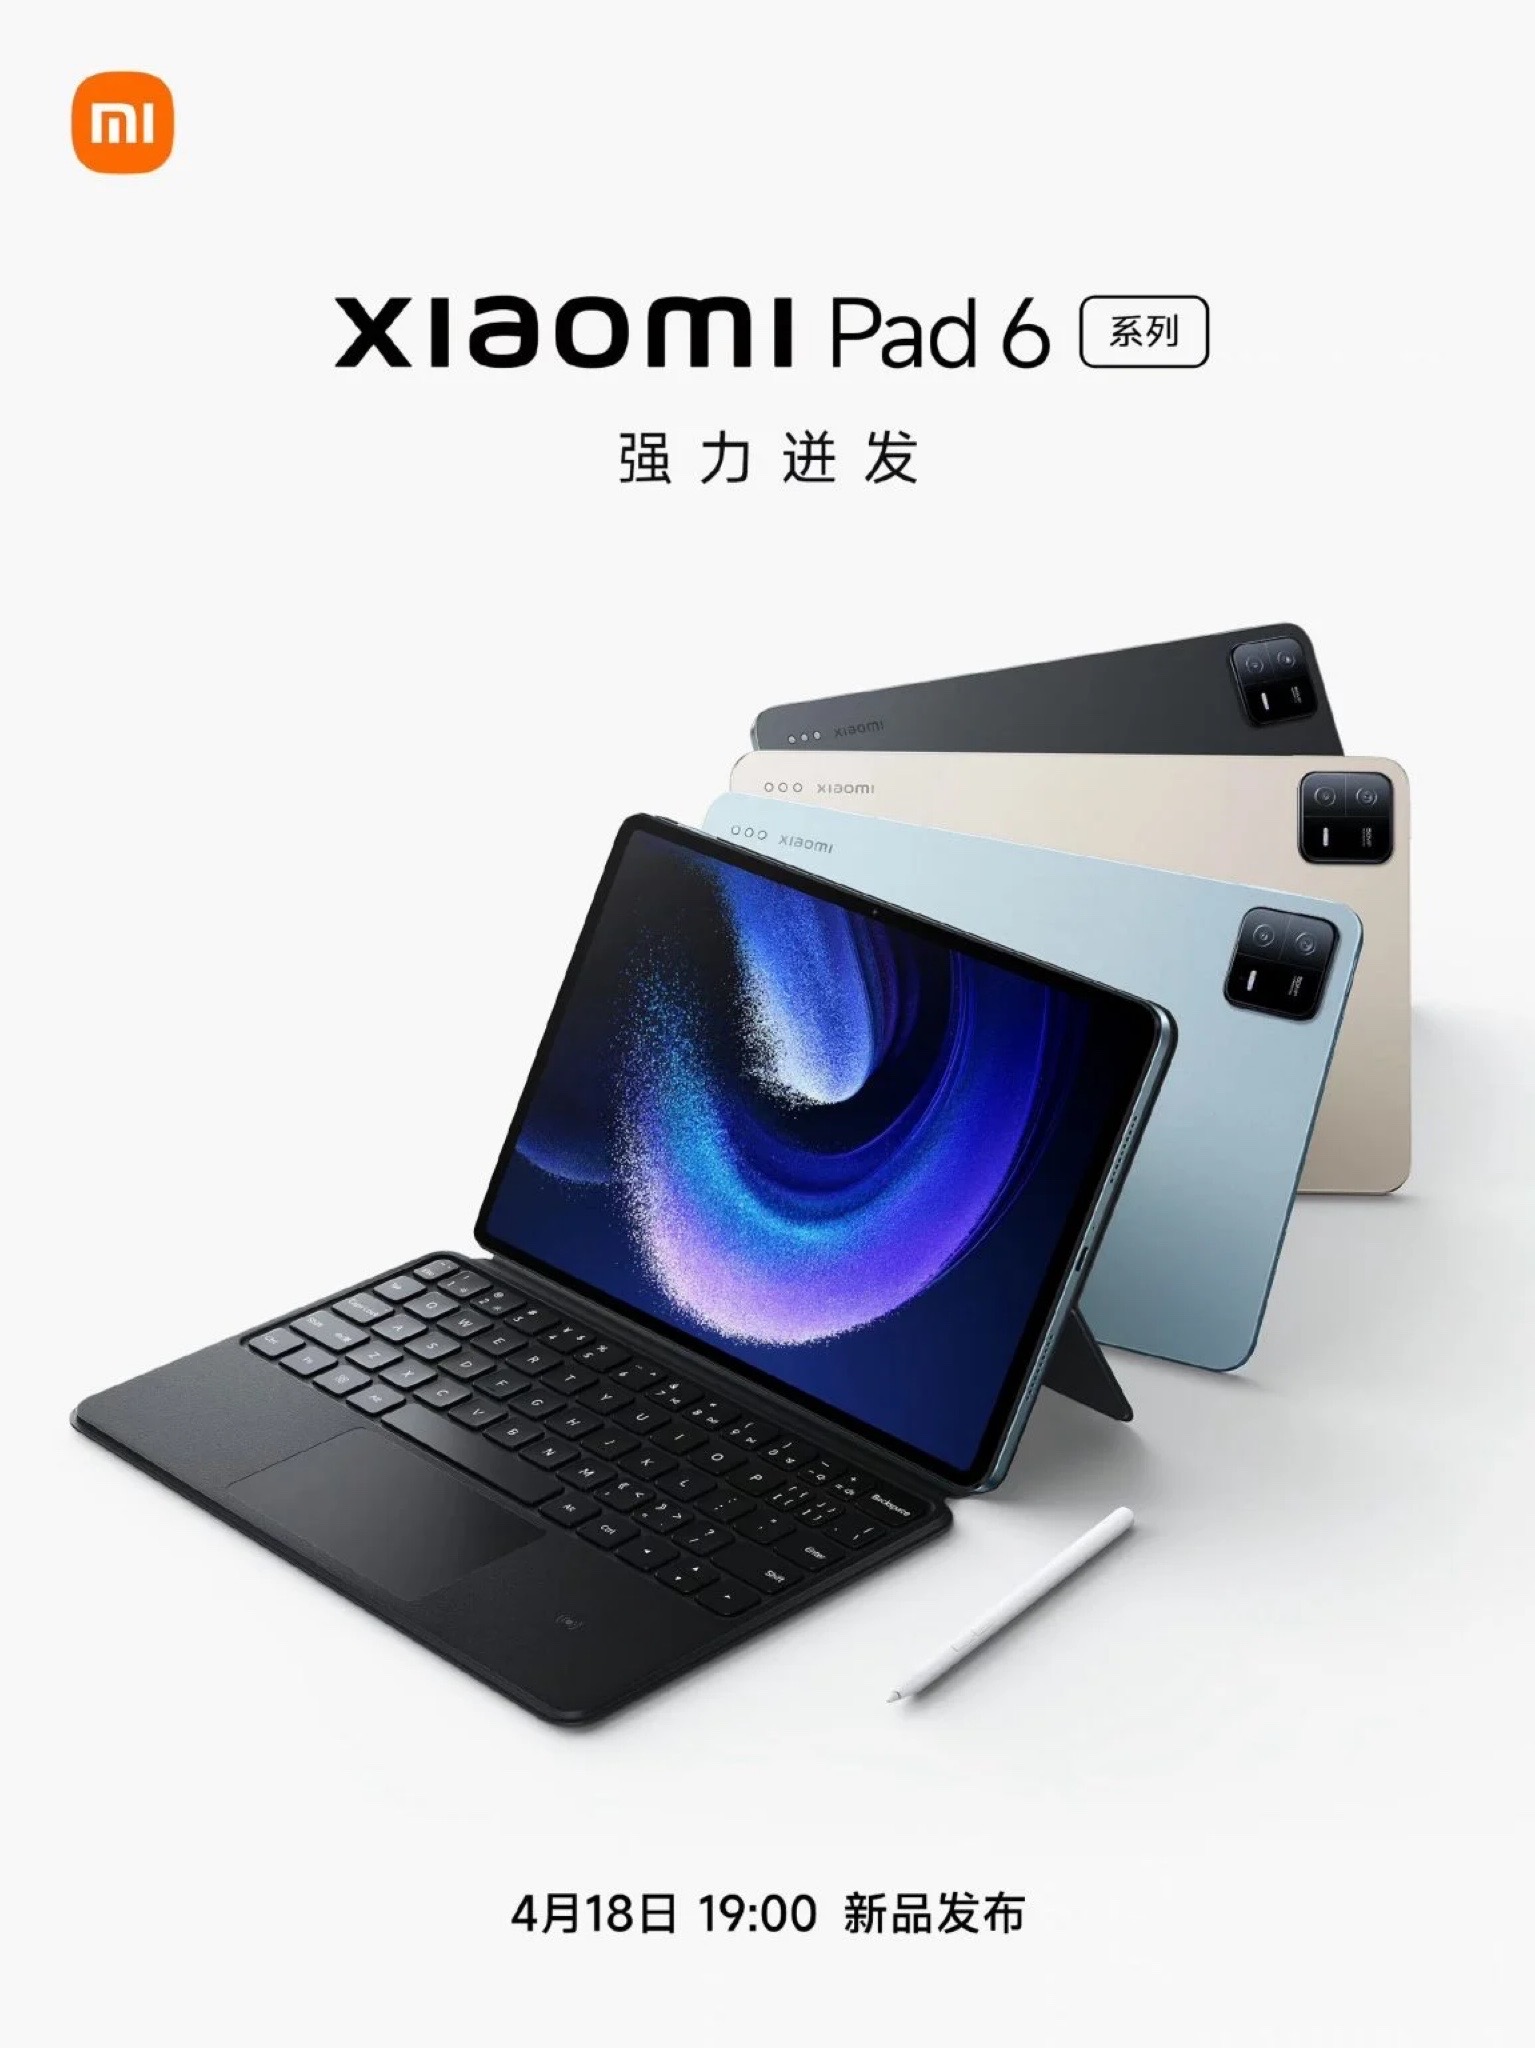 Xiaomi Smart Pen for the Mi Pad 5 series get FCC certification